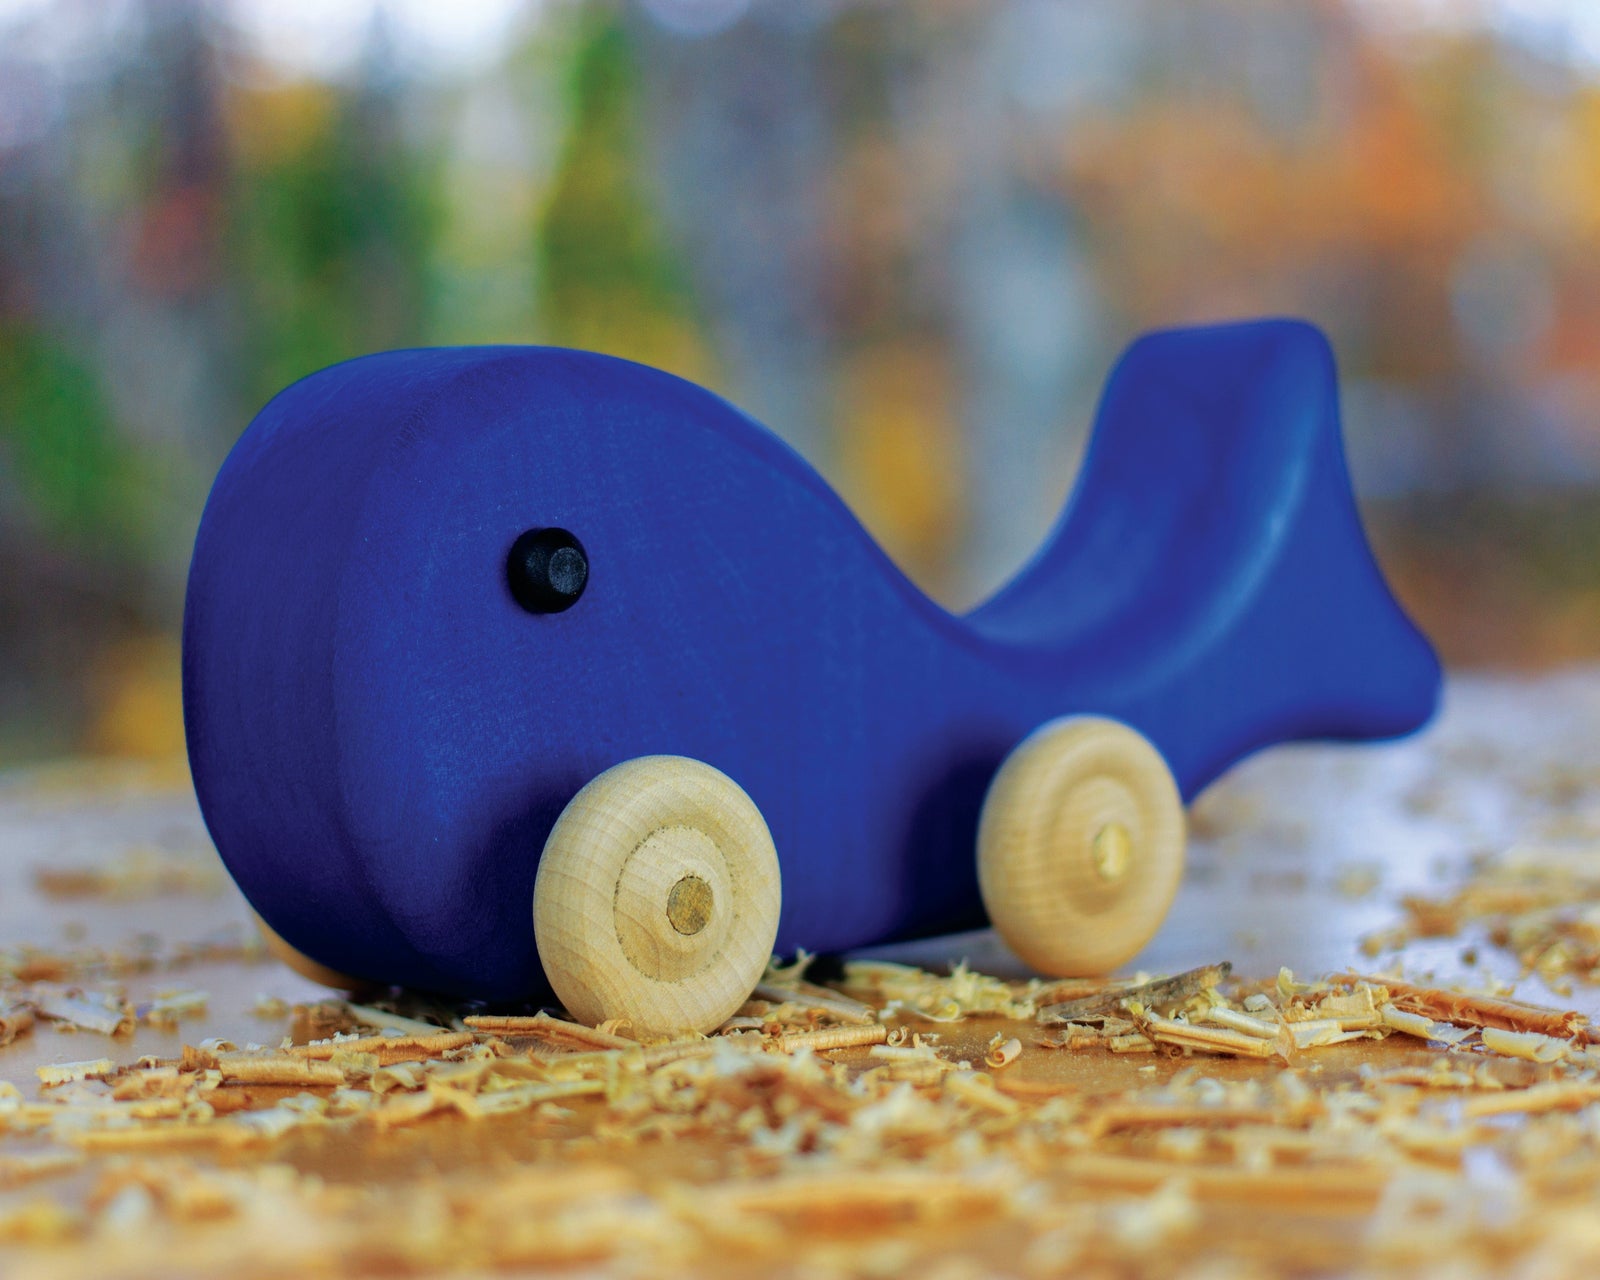 Wooden mini animals with wheels - Toy Maker of Lunenburg